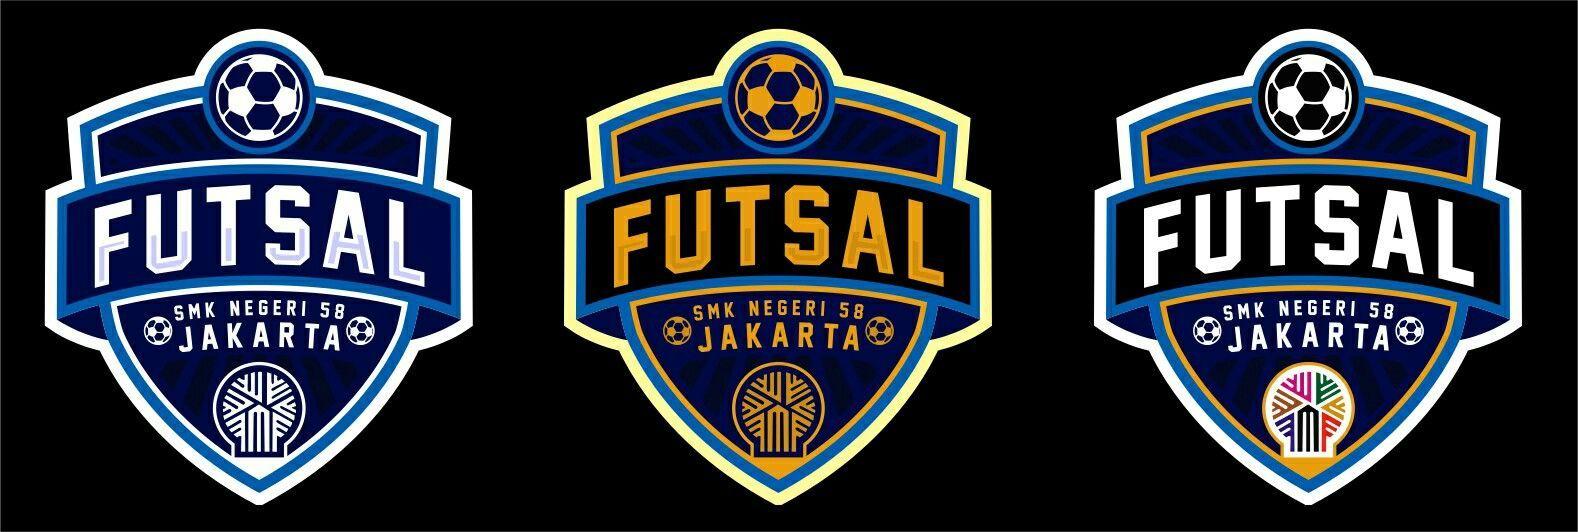 Futsal Logo - Logo Design for futsal team 58 Vocational High School Jakarta